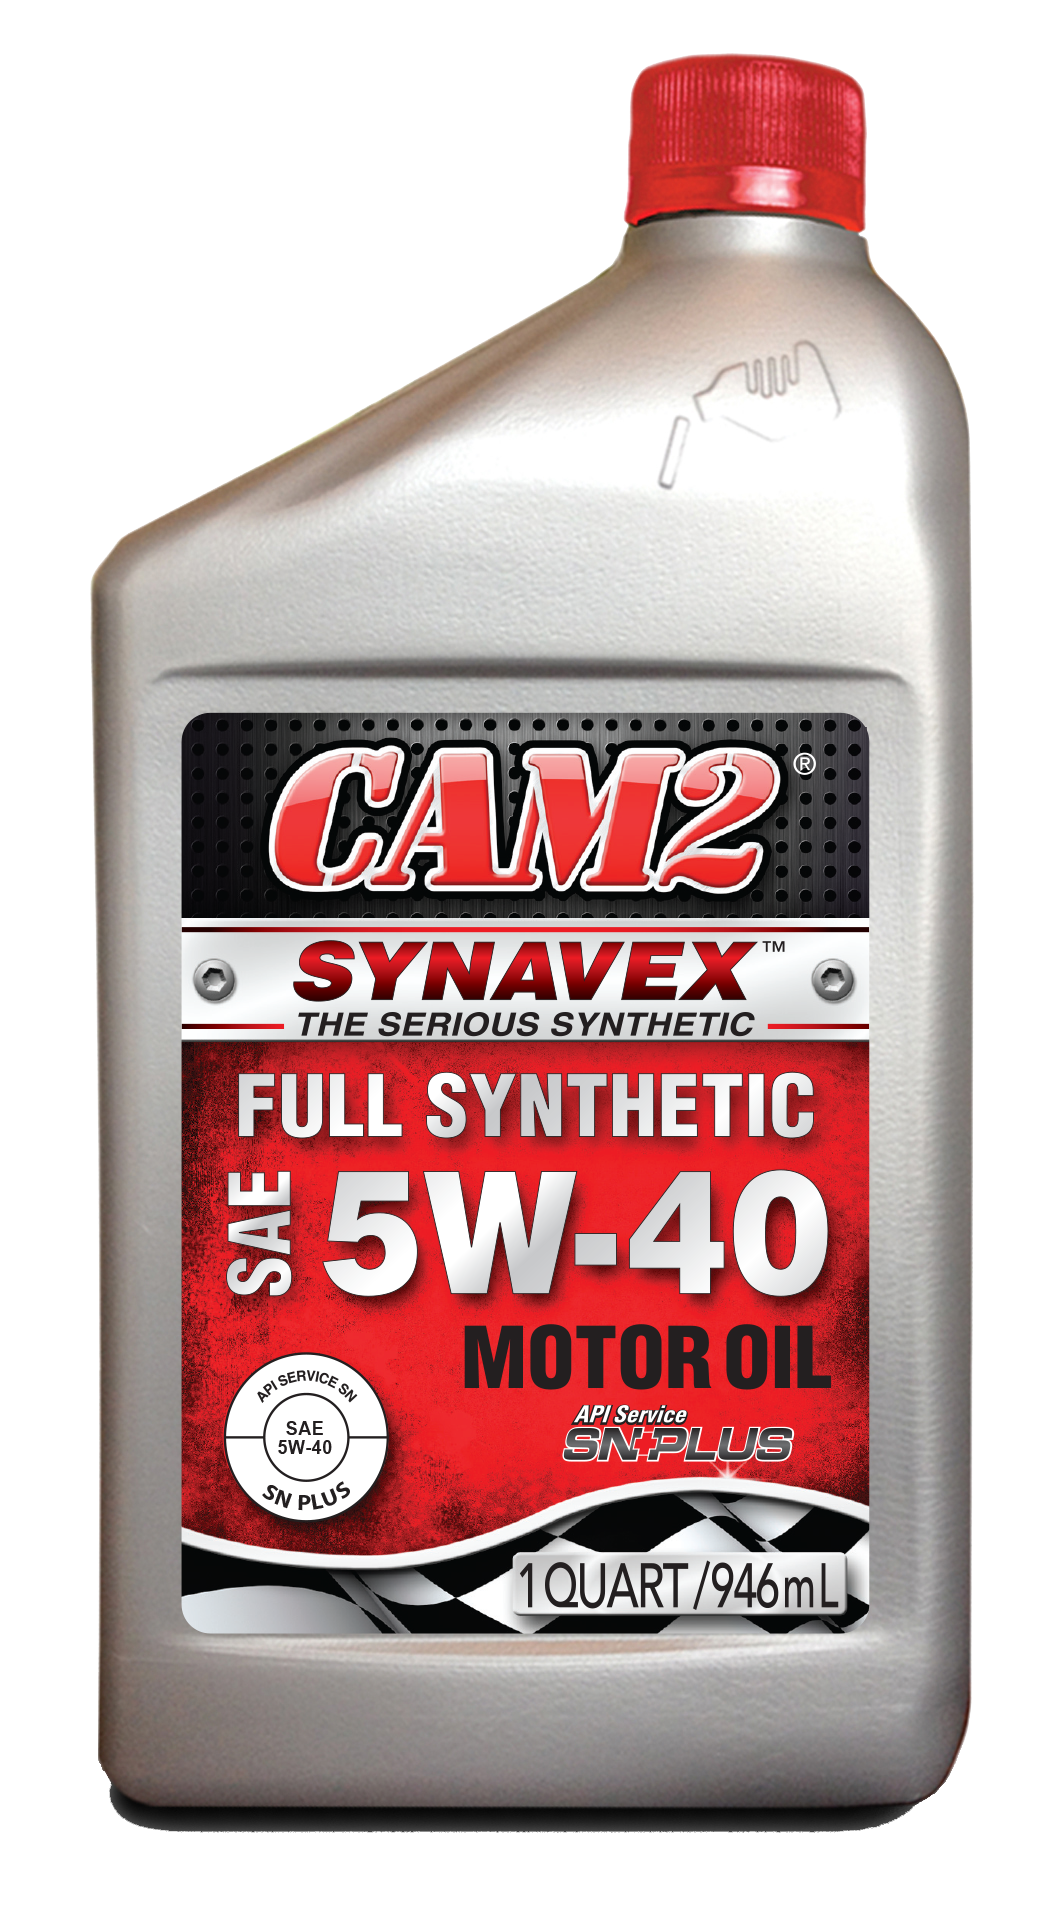 CAM2 SYNAVEX™ 5W-40 FULL SYNTHETIC ENGINE OIL API SN+ 80565-992